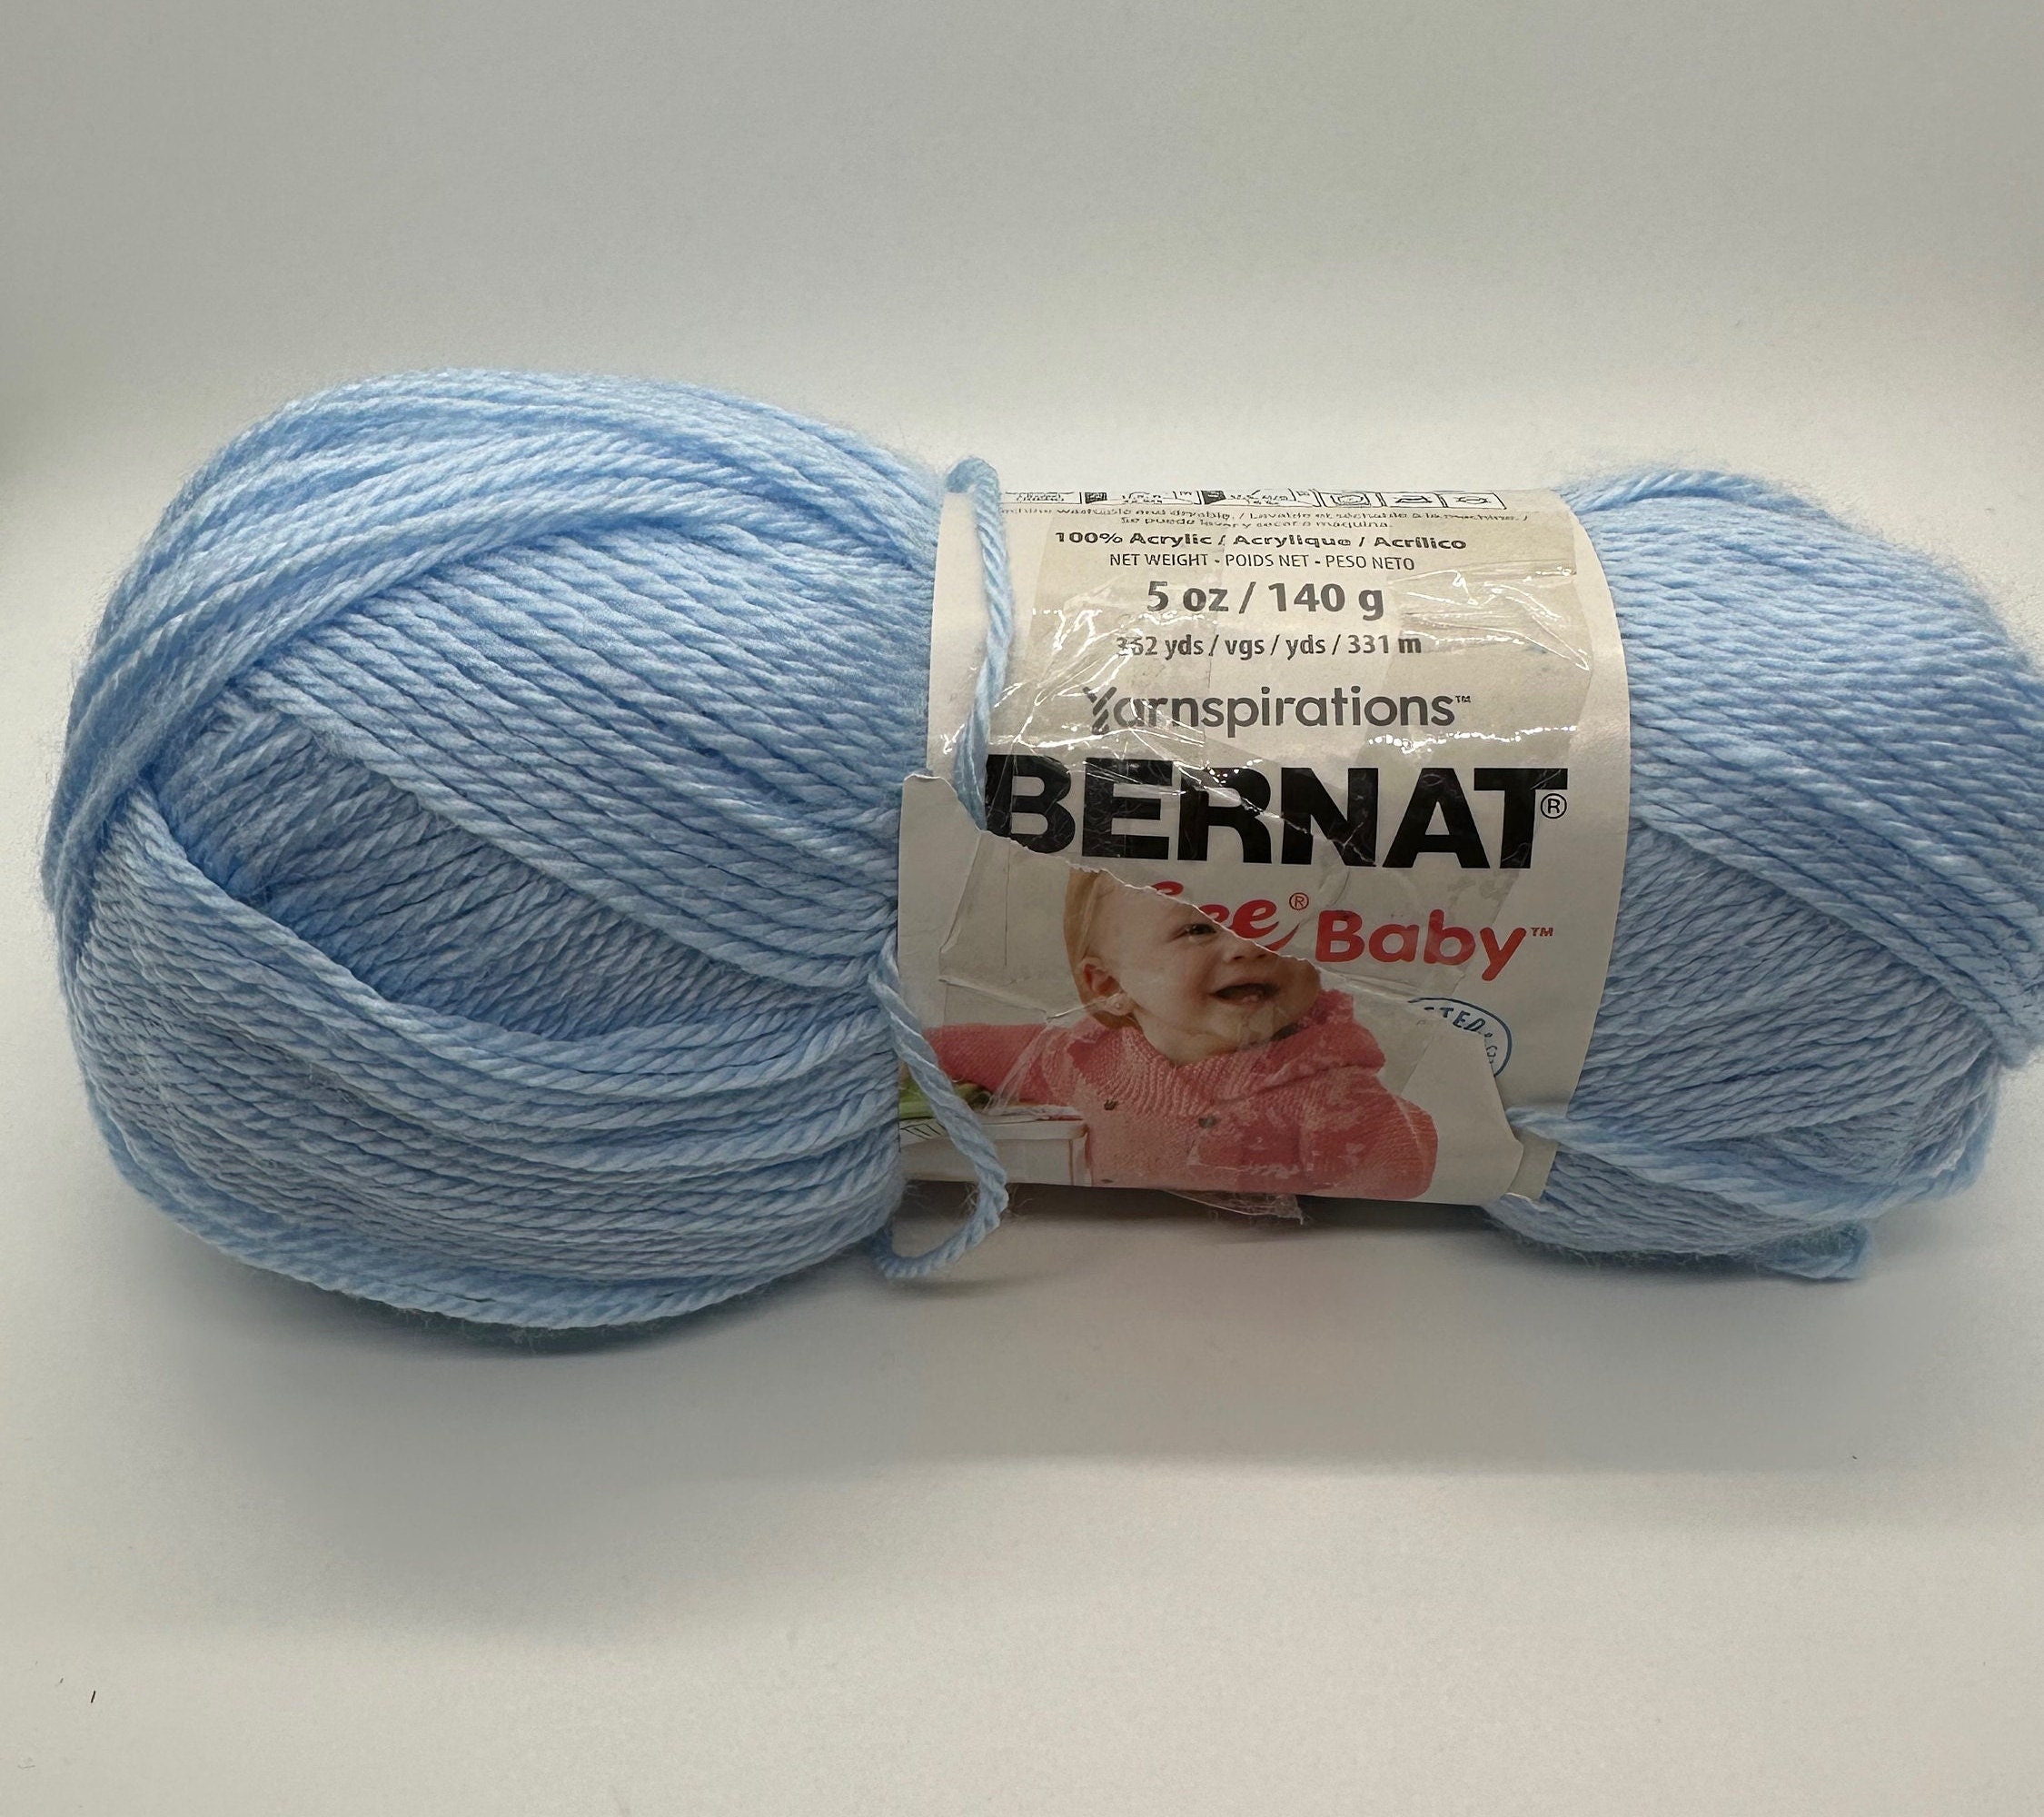 Bernat Softee Baby Yarn in Pale Blue Color, Light Blue Baby Yarn 